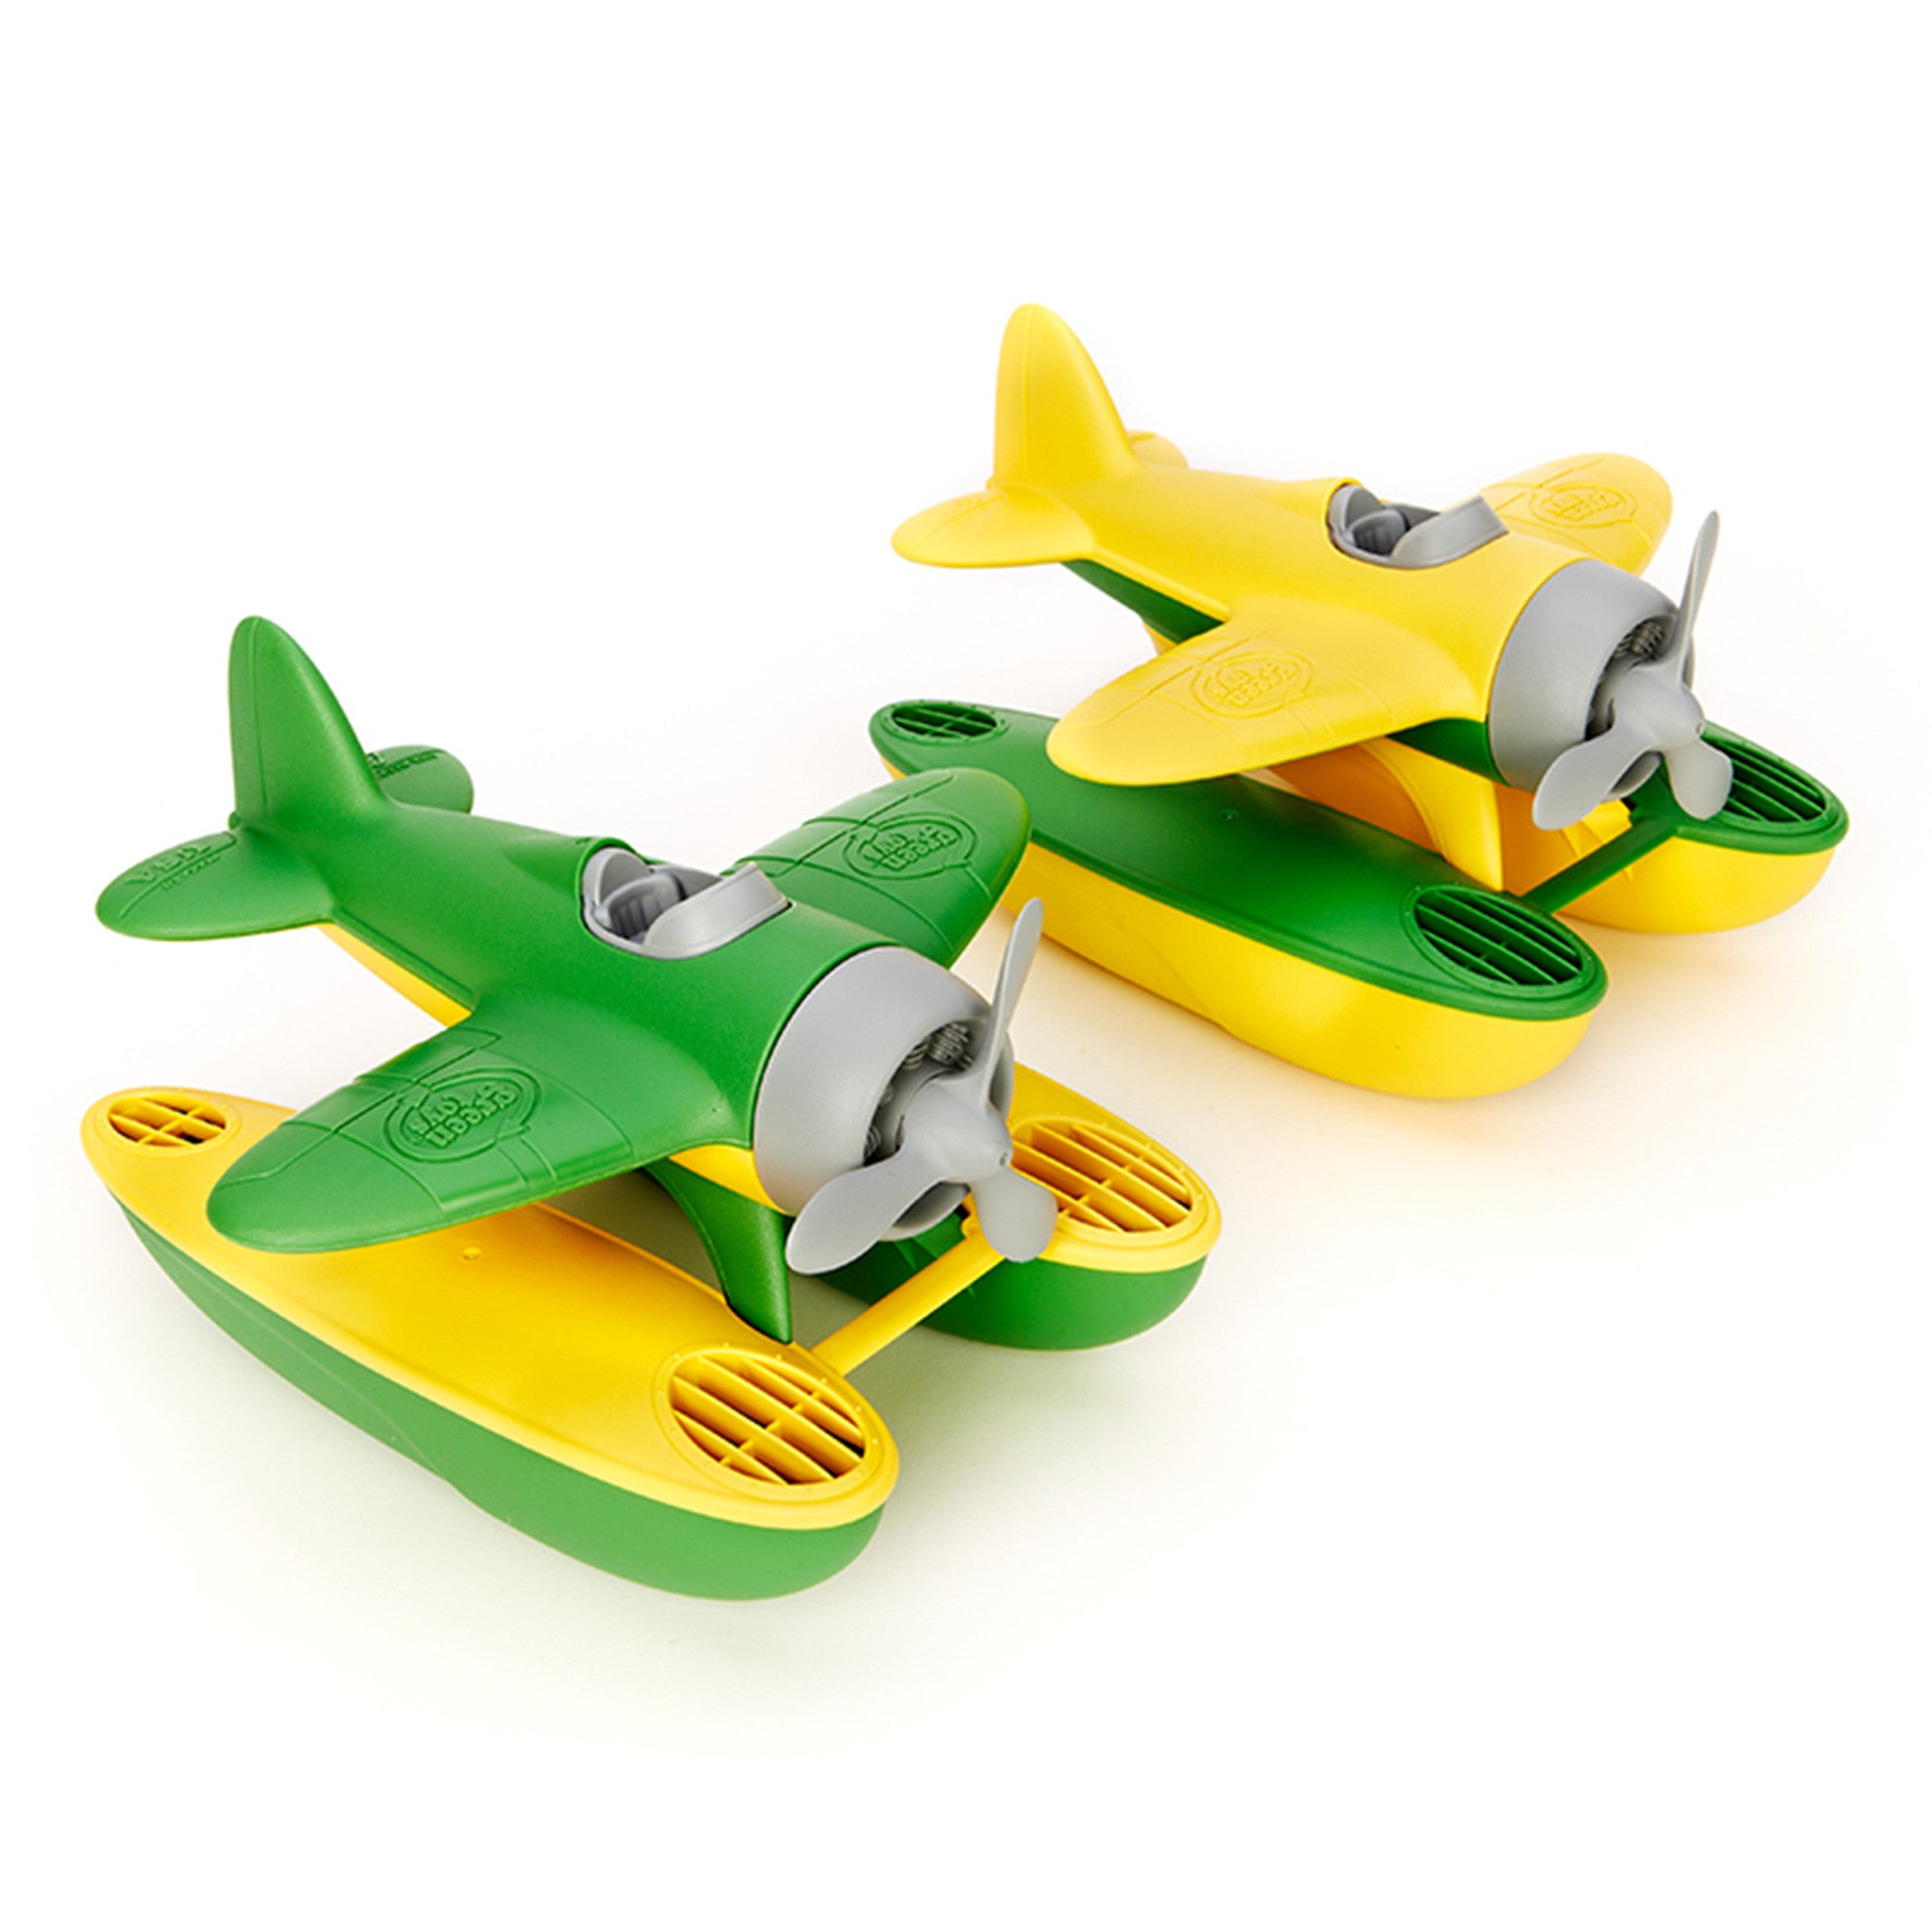 sea plane toy